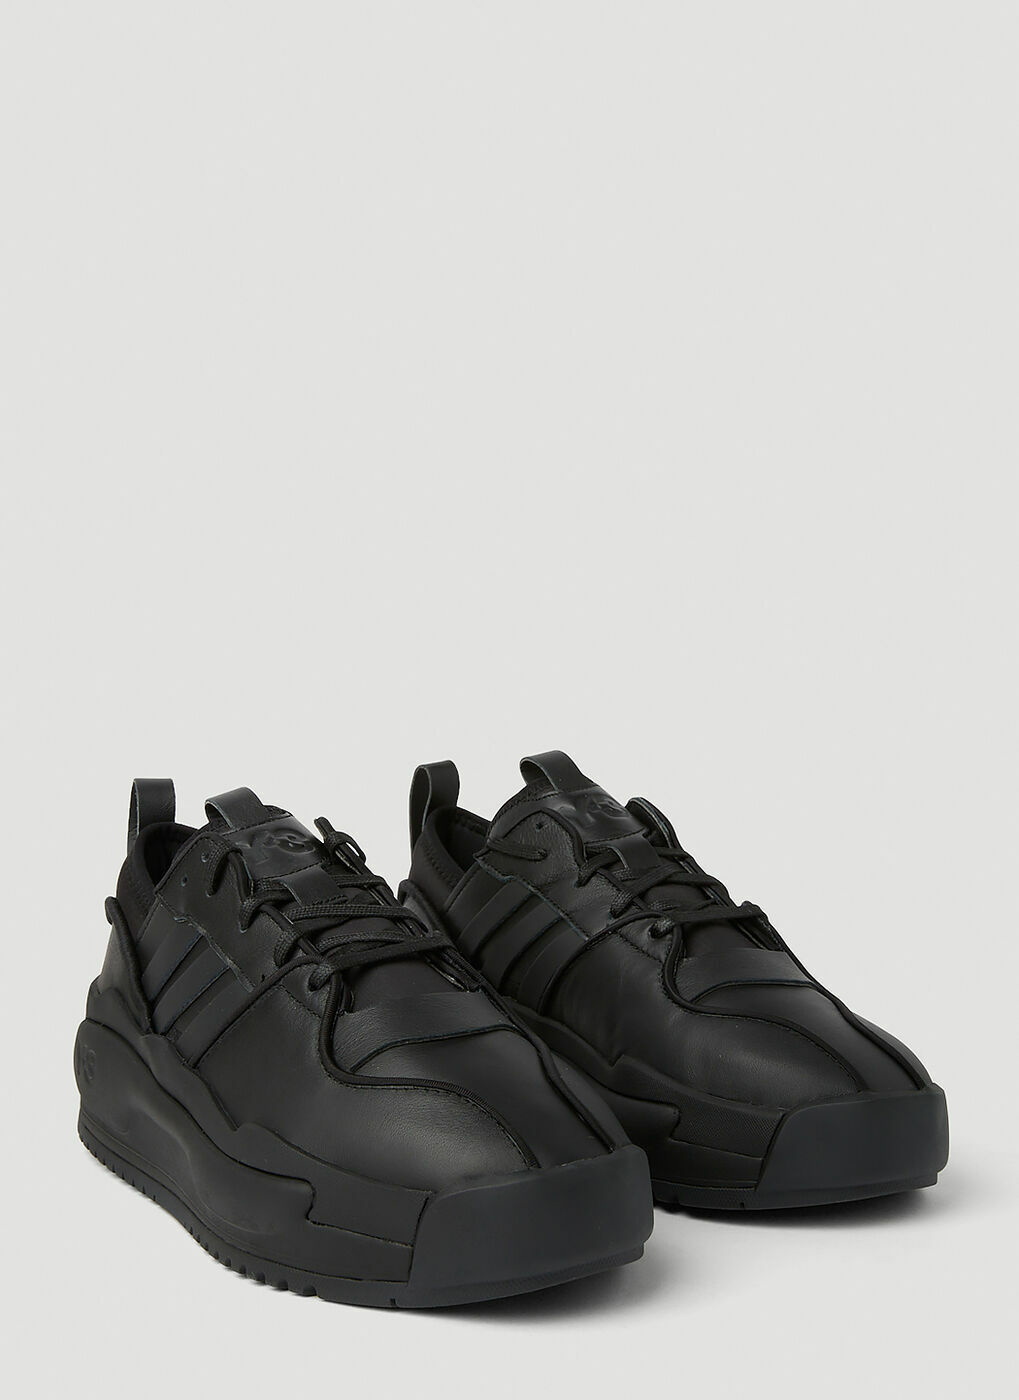 Men's shoes Y-3 Rivalry Black/ Black/ Black